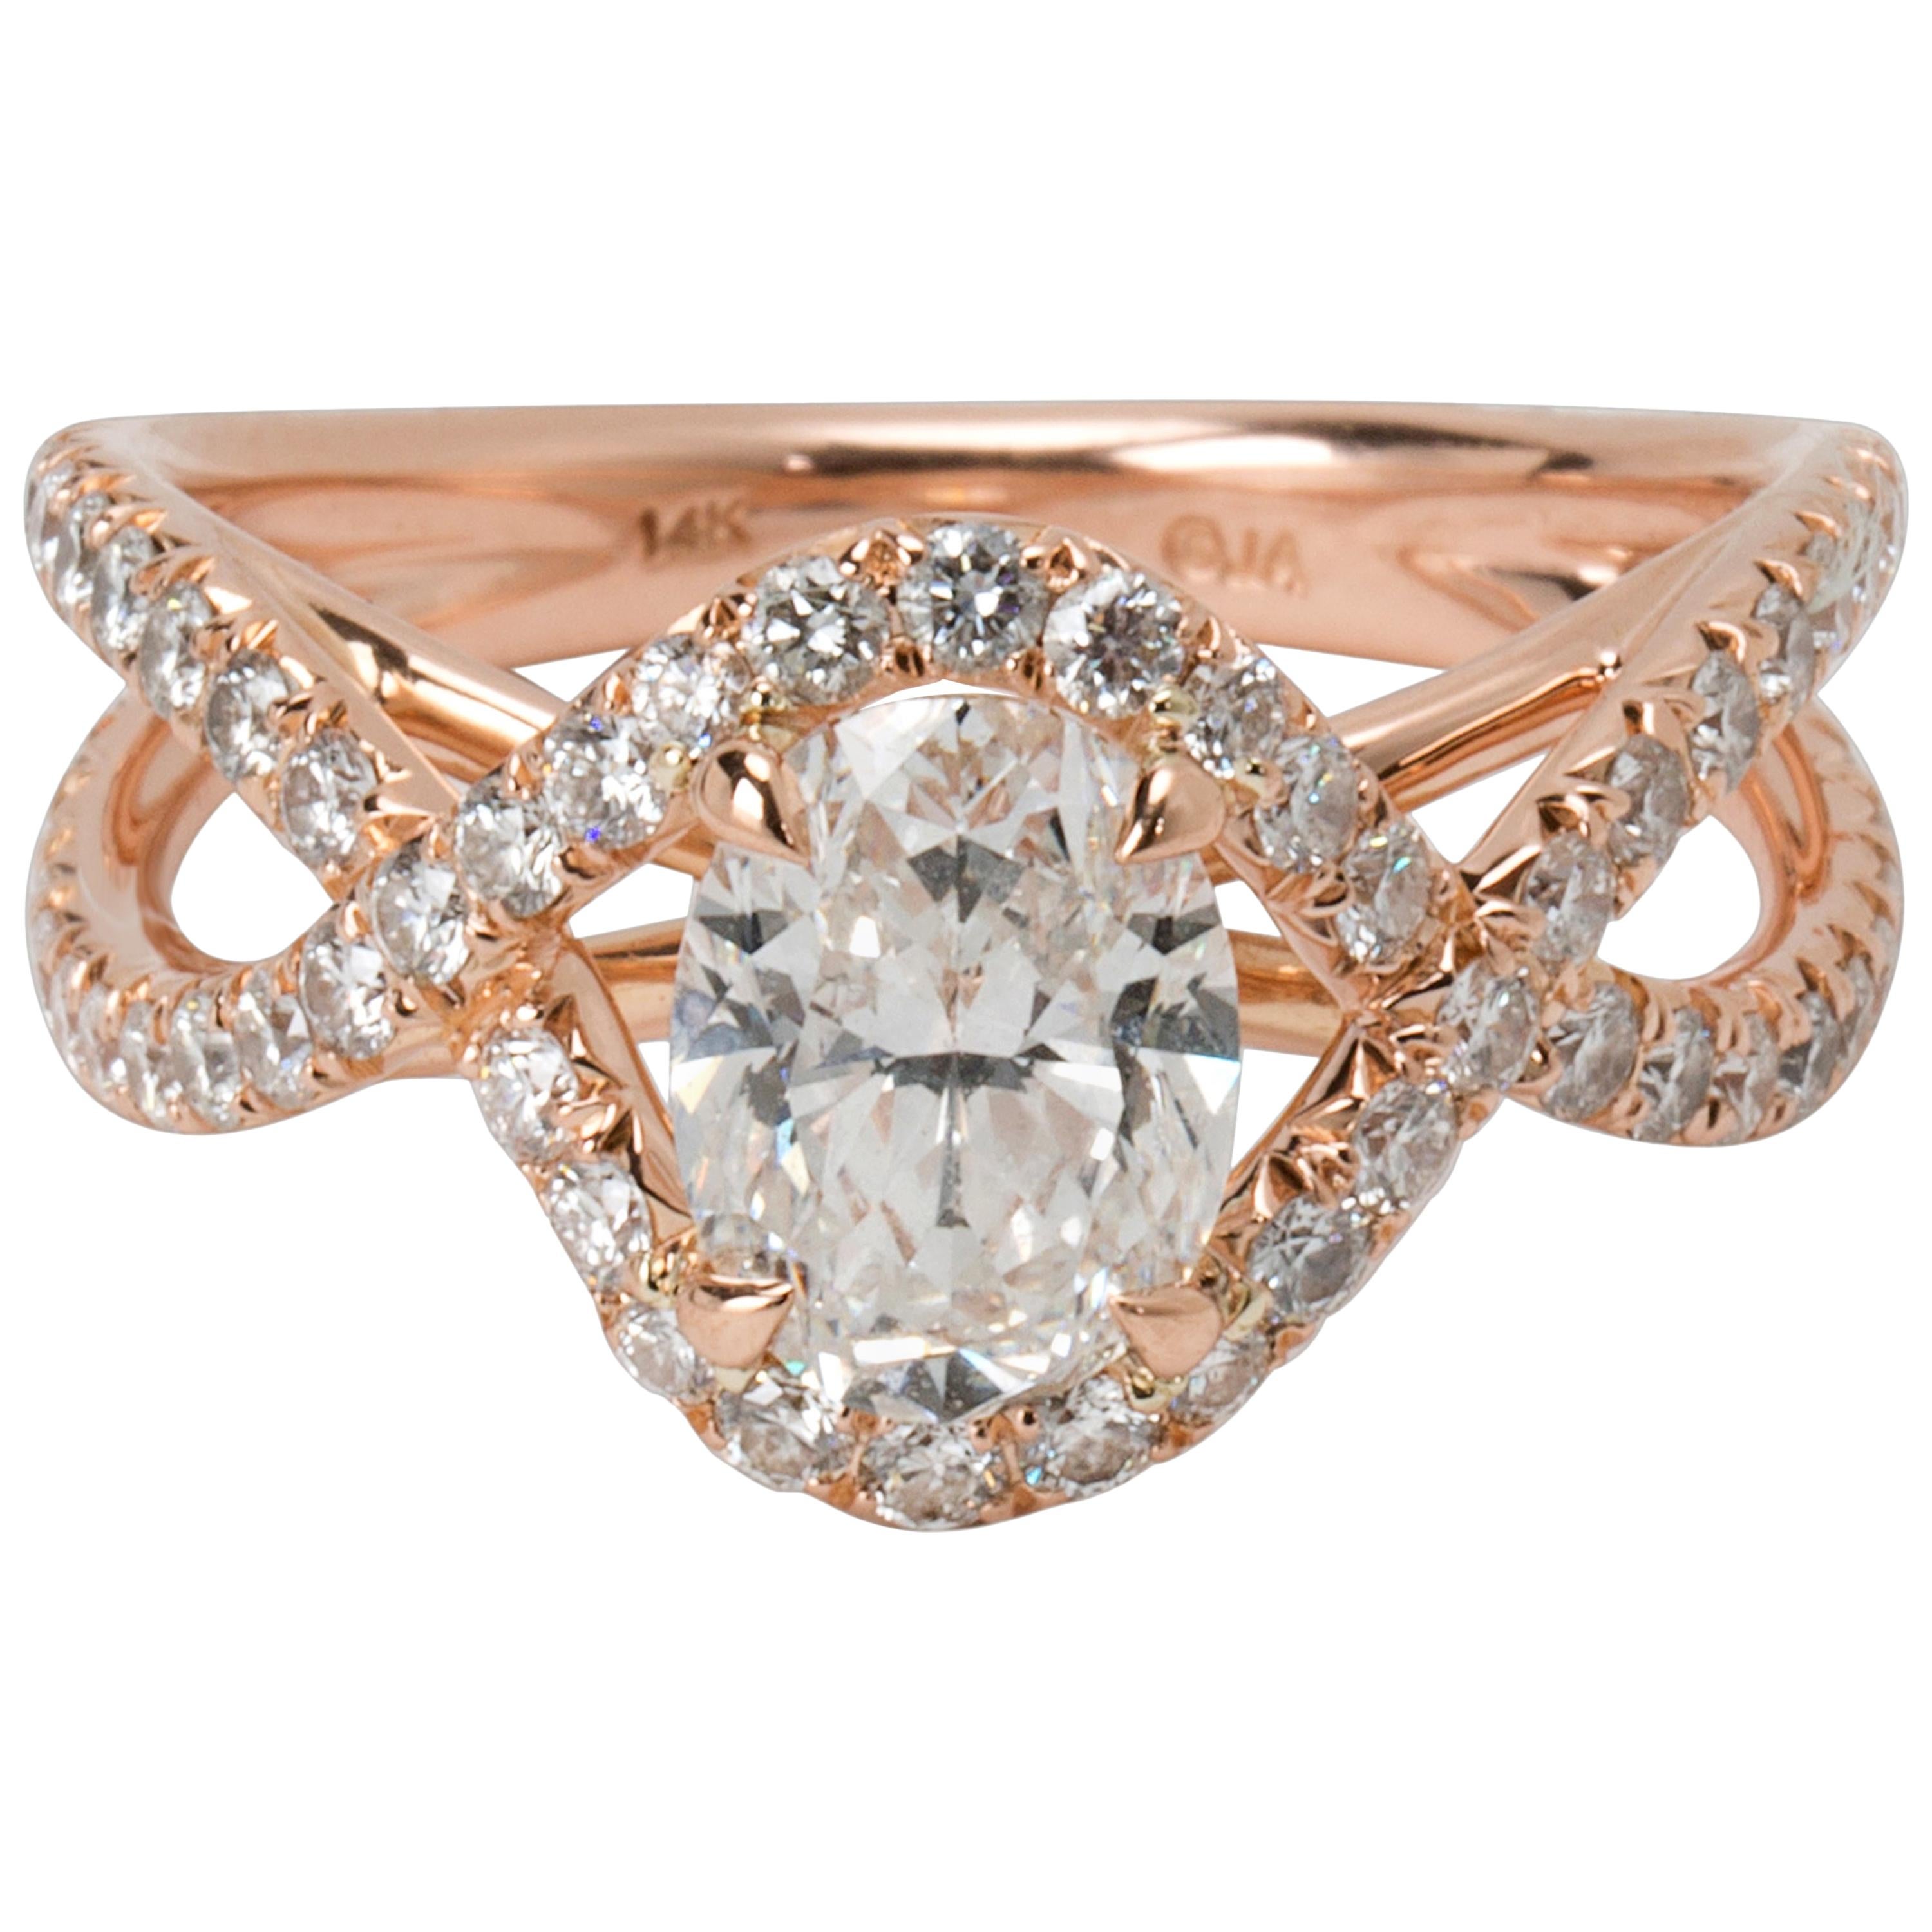 James Allen Oval Diamond Engagement Ring in 14 Karat Rose Gold '2.65 Carat'